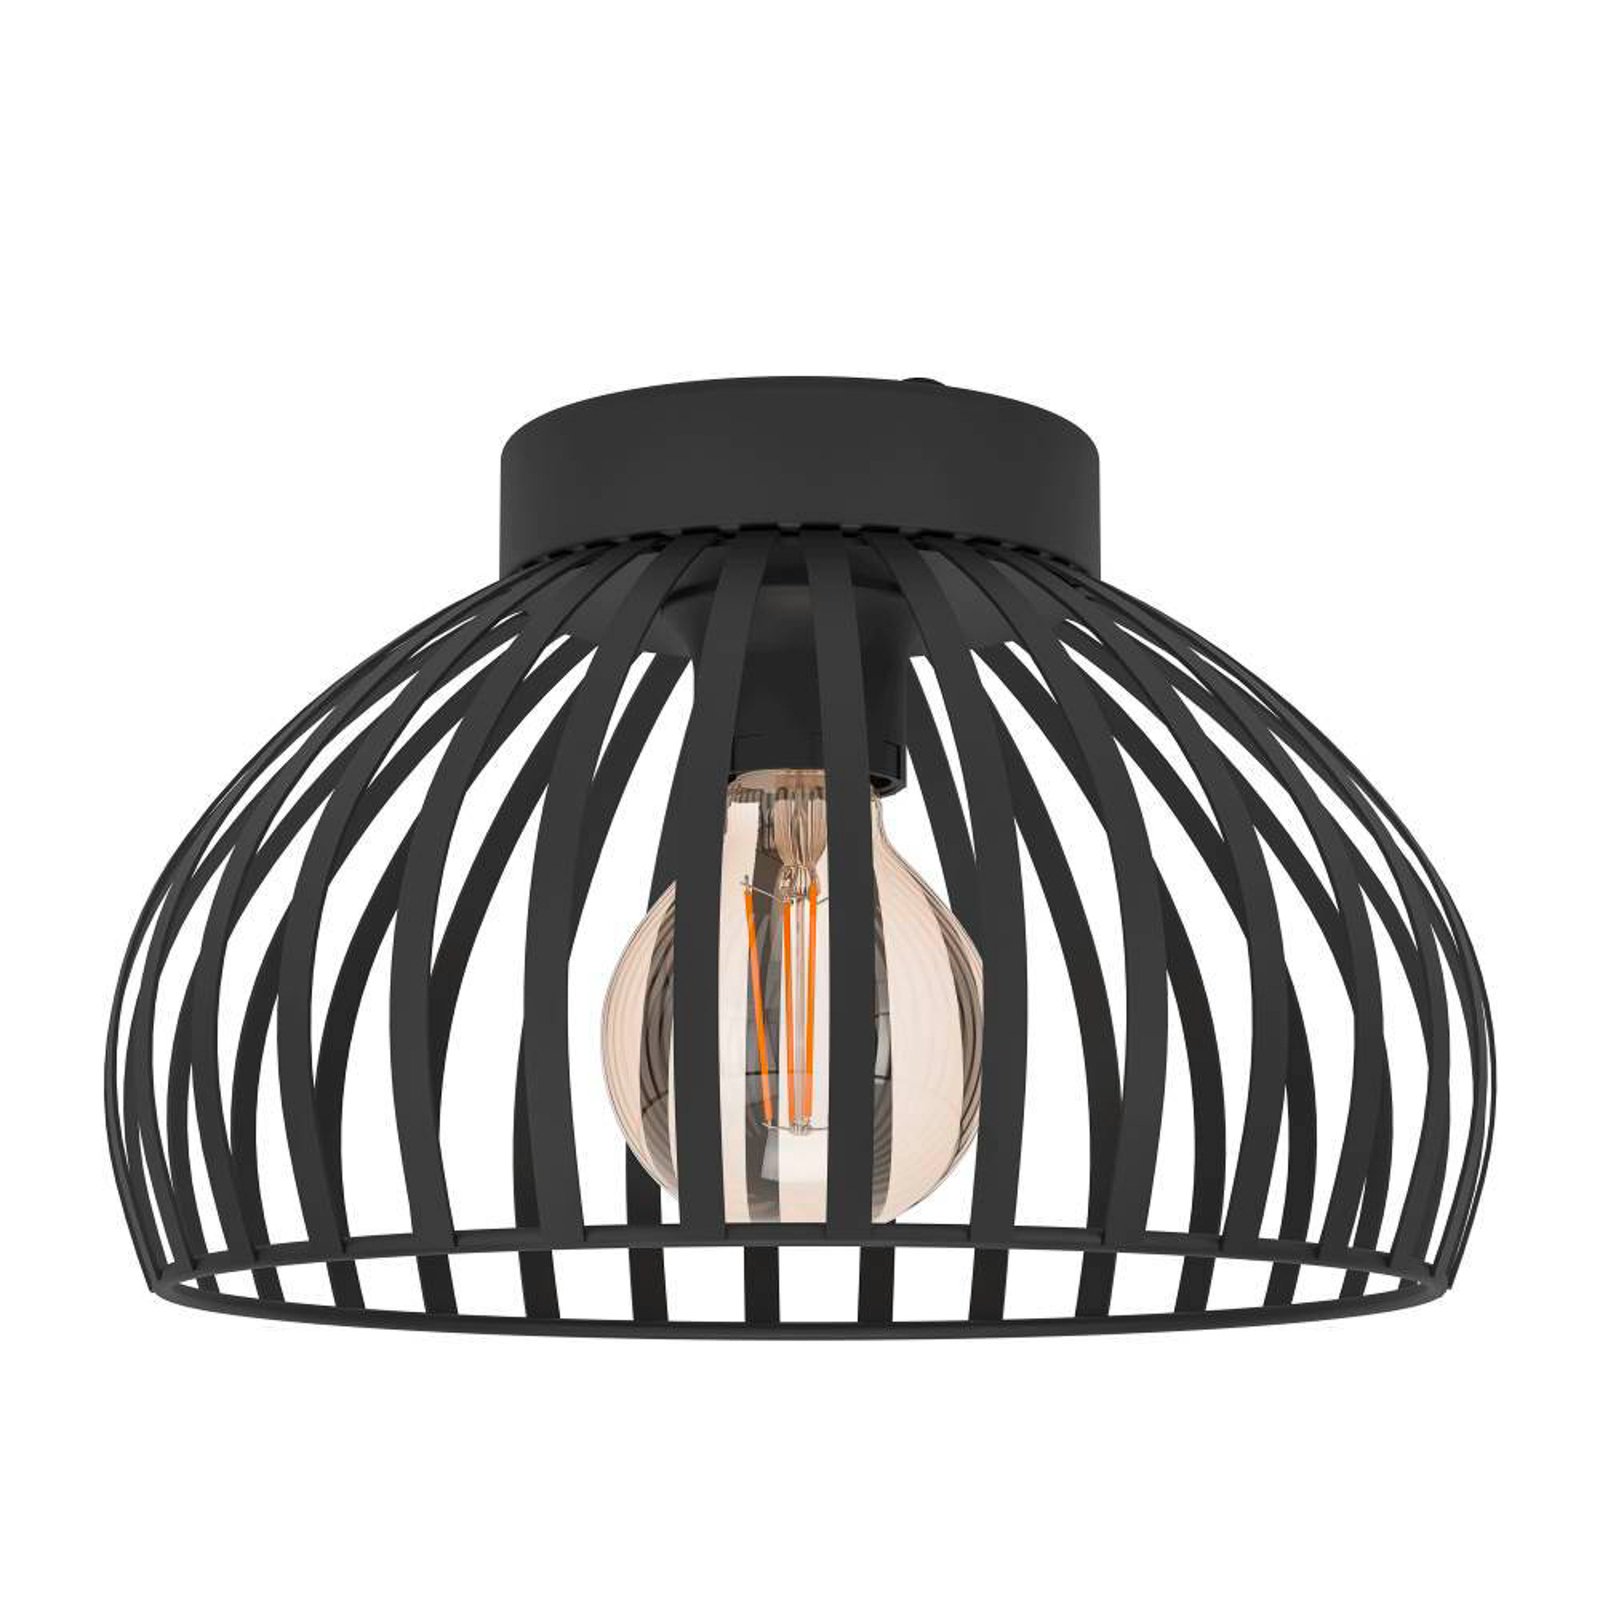 EGLO Mogano 3 ceiling light cage lampshade Ø 28 cm